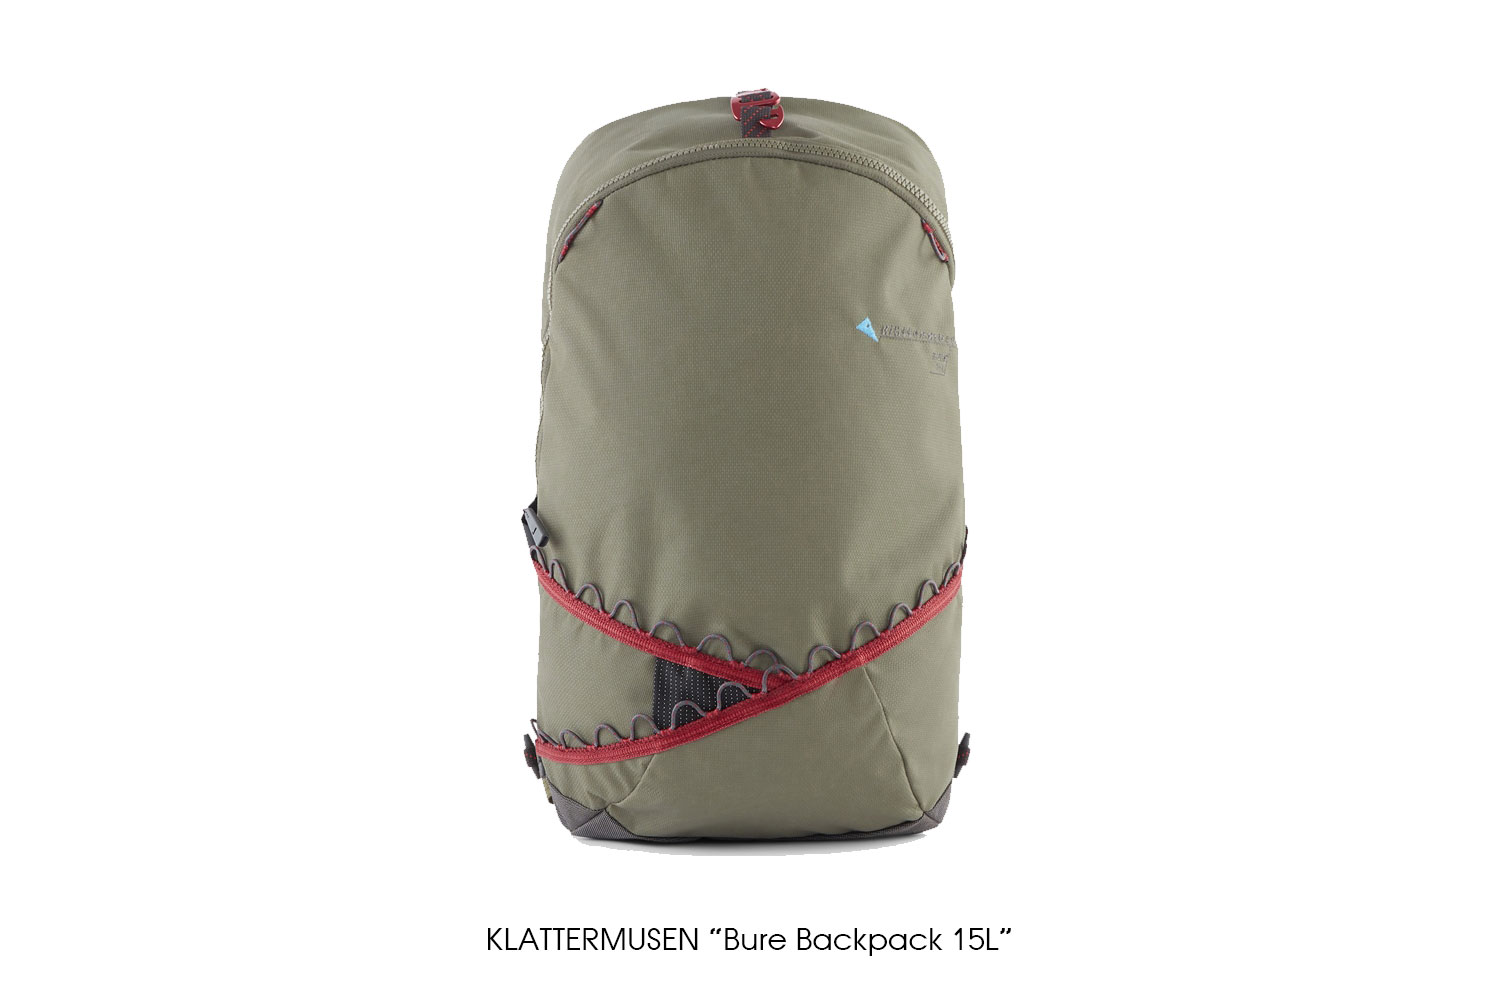 KLATTERMUSEN "Bure Backpack 15L"